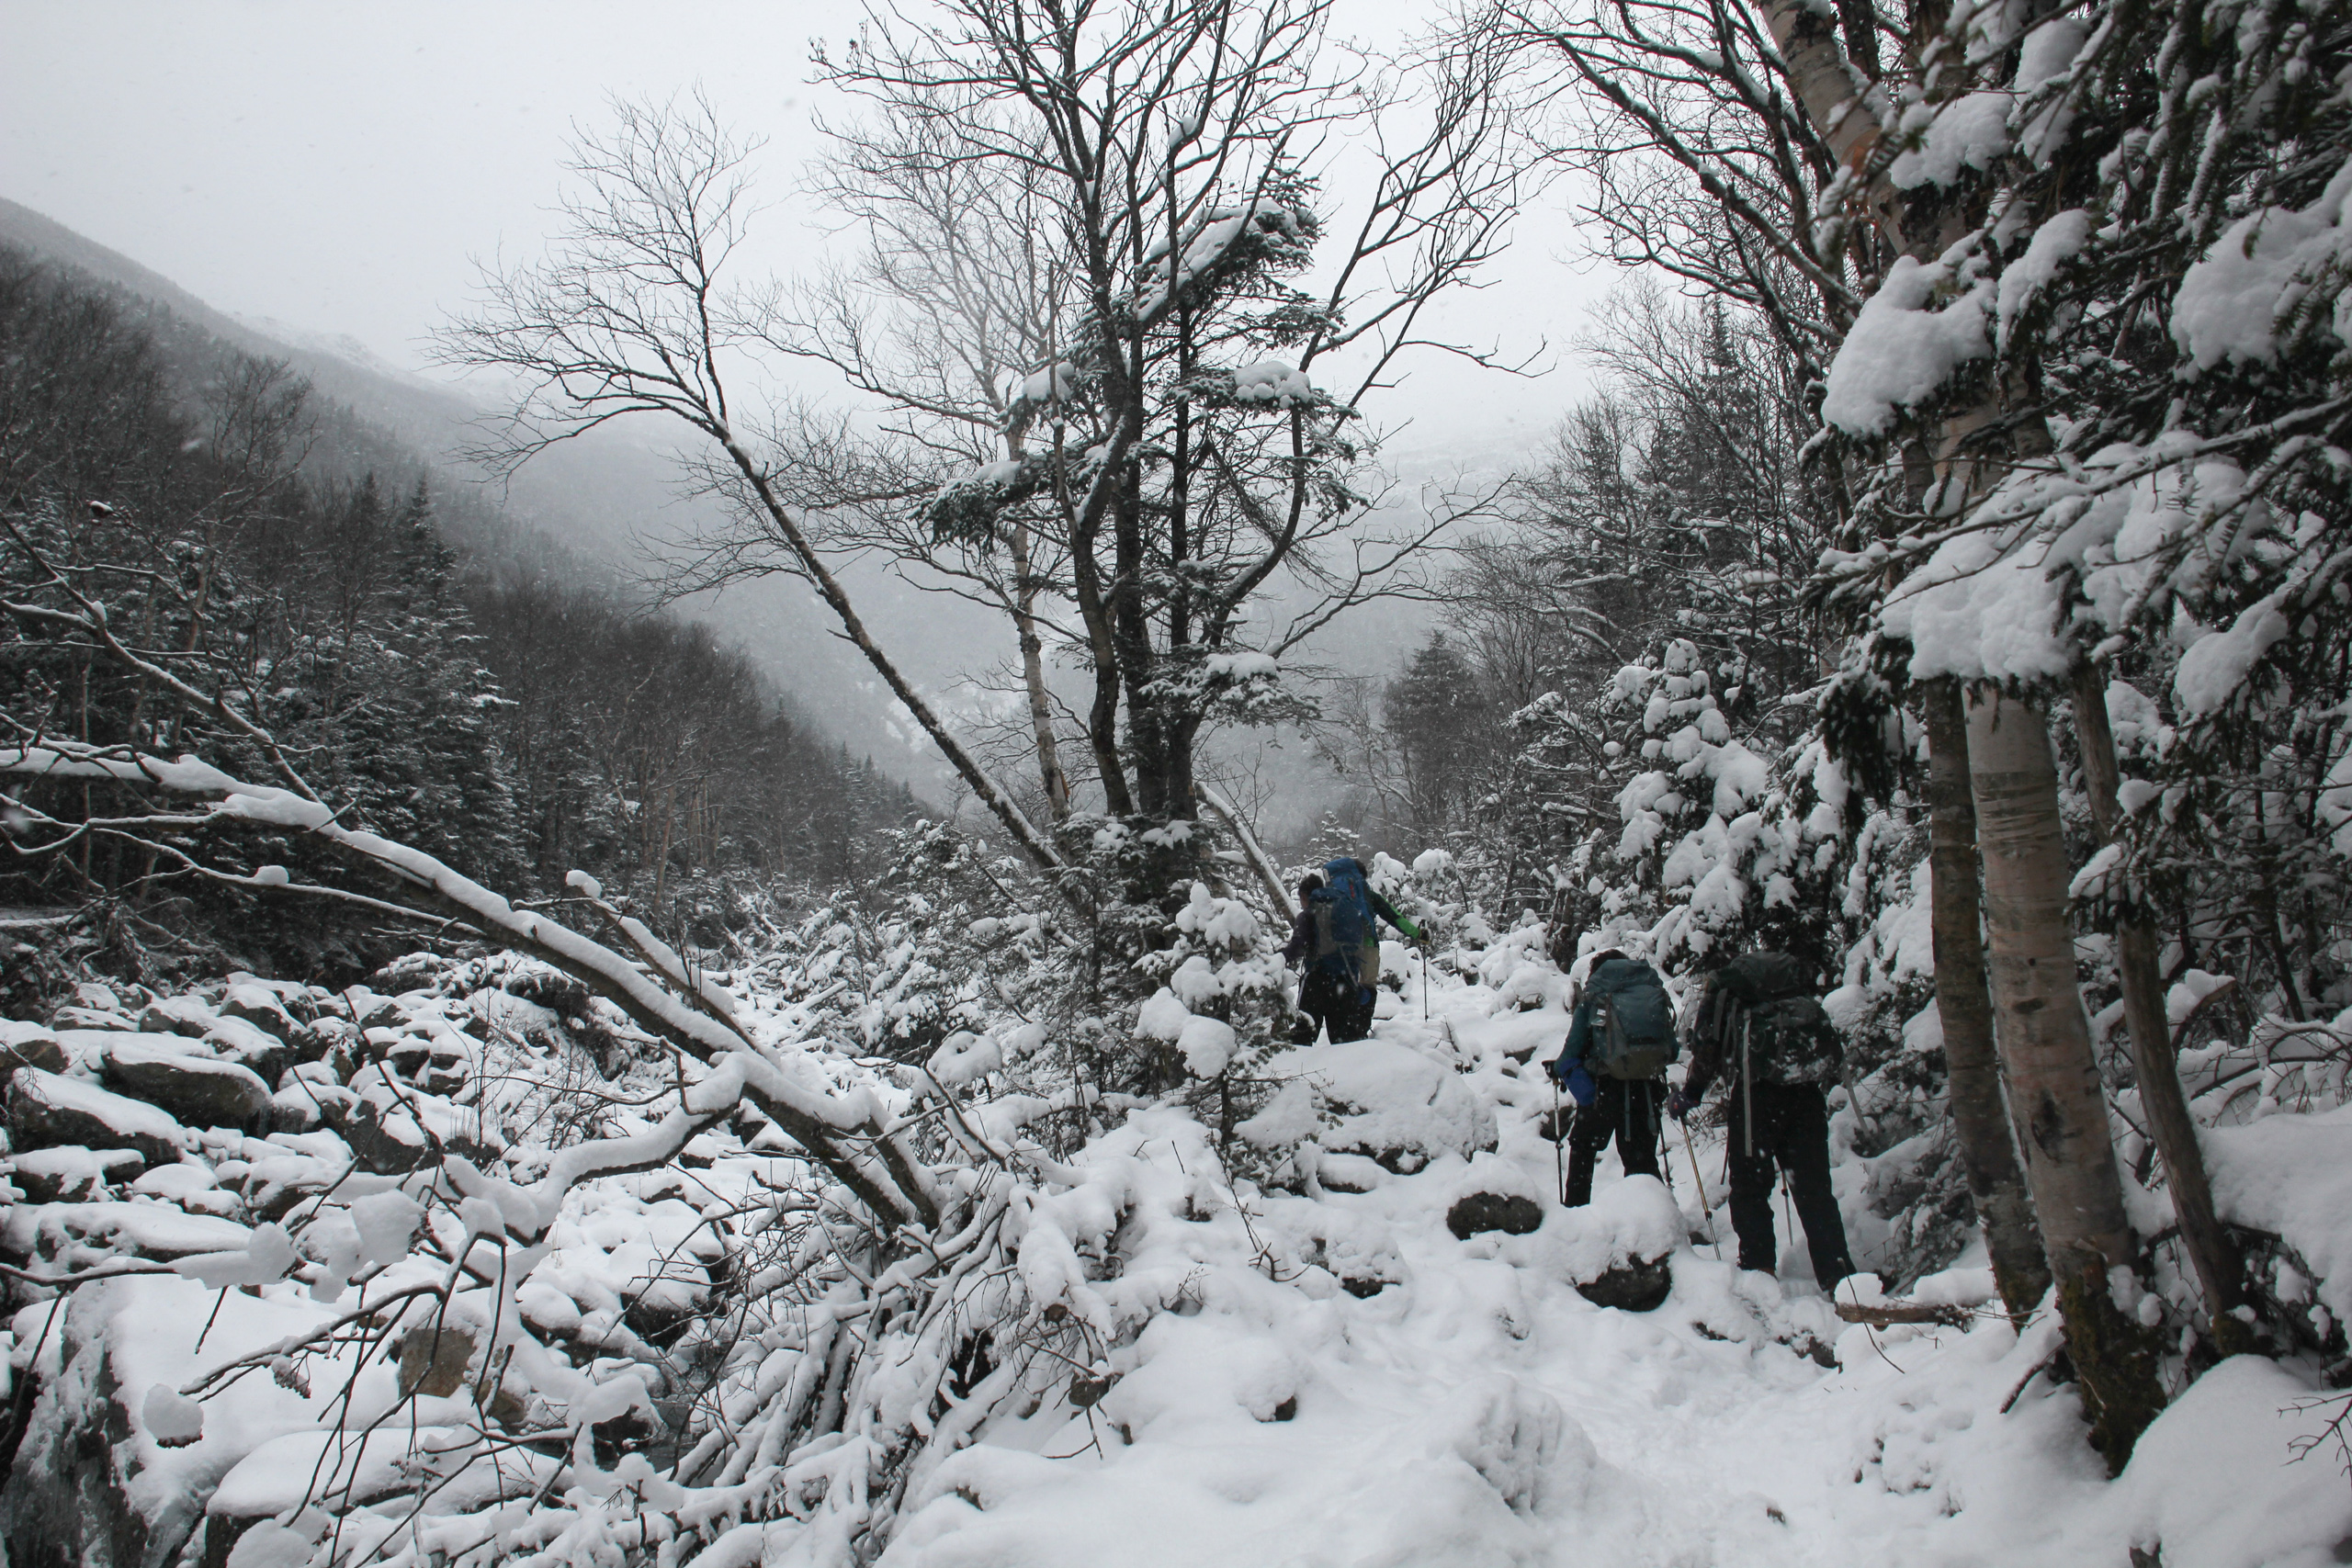 Hikers hike up Mount Washington in deep snow.